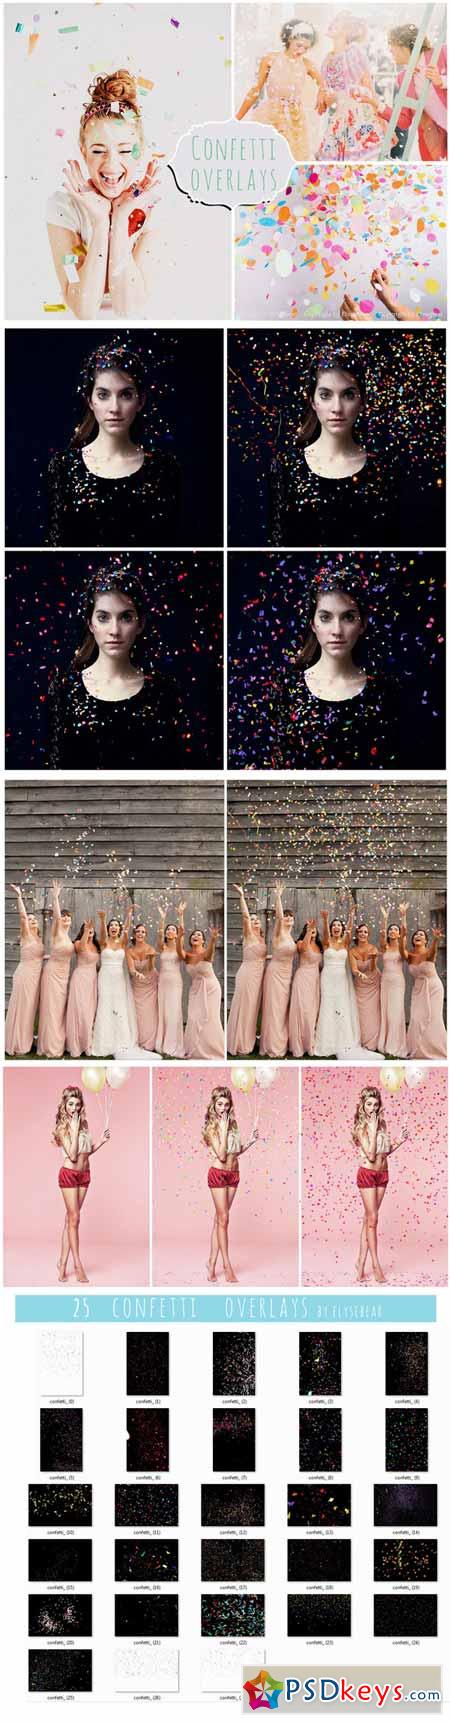 25 Confetti Photoshop Overlays 361313